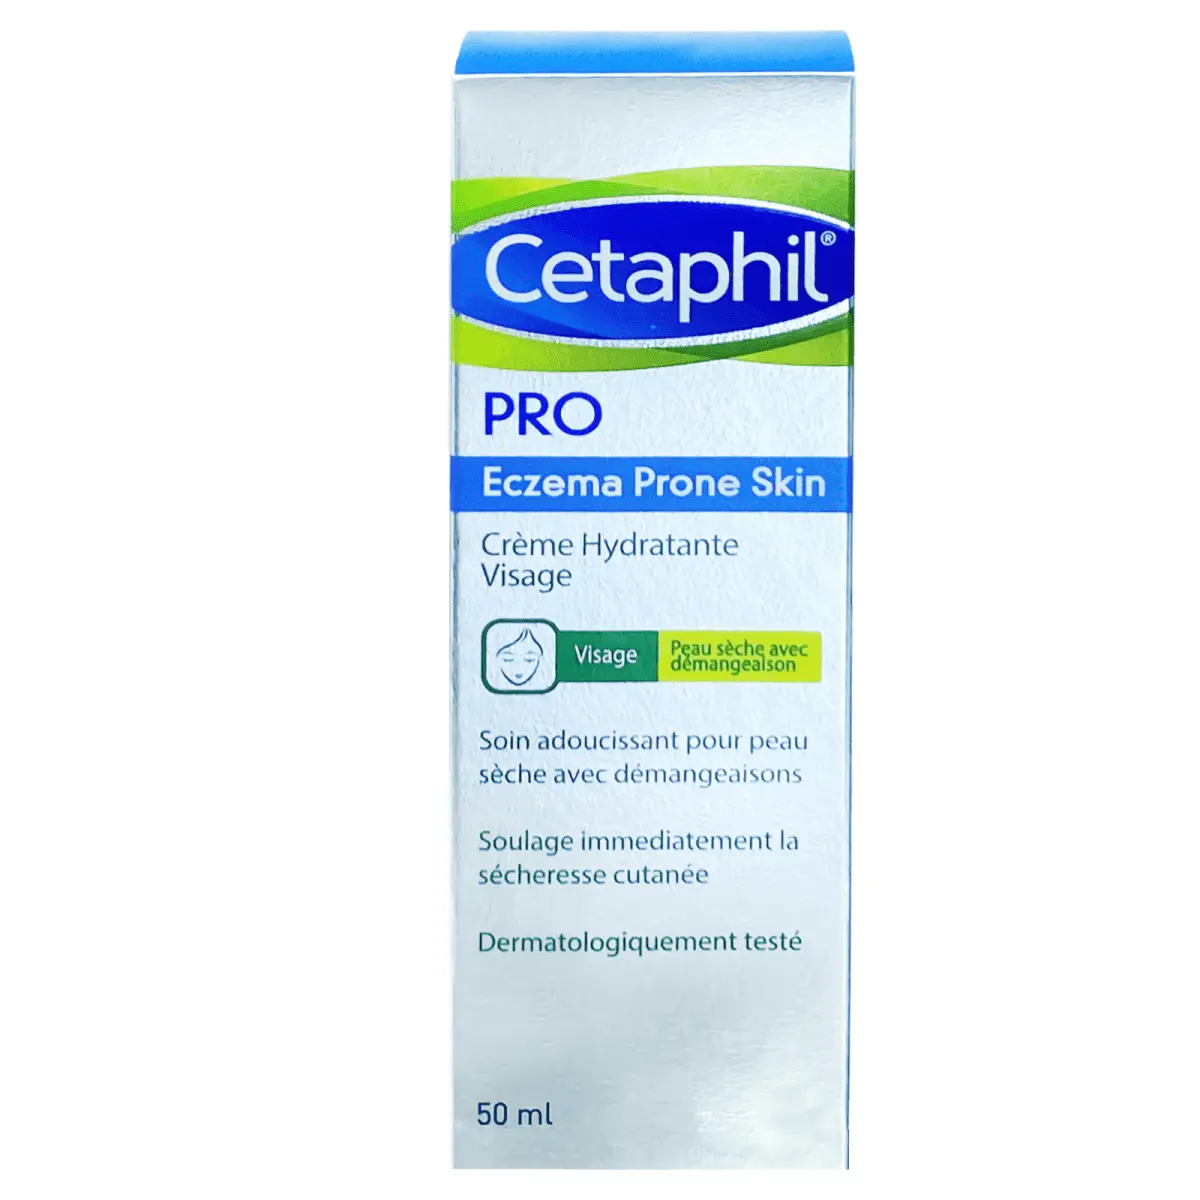 Cetaphil Pro Eczema Prone Skin Face Moisturizing Cream 50 Ml